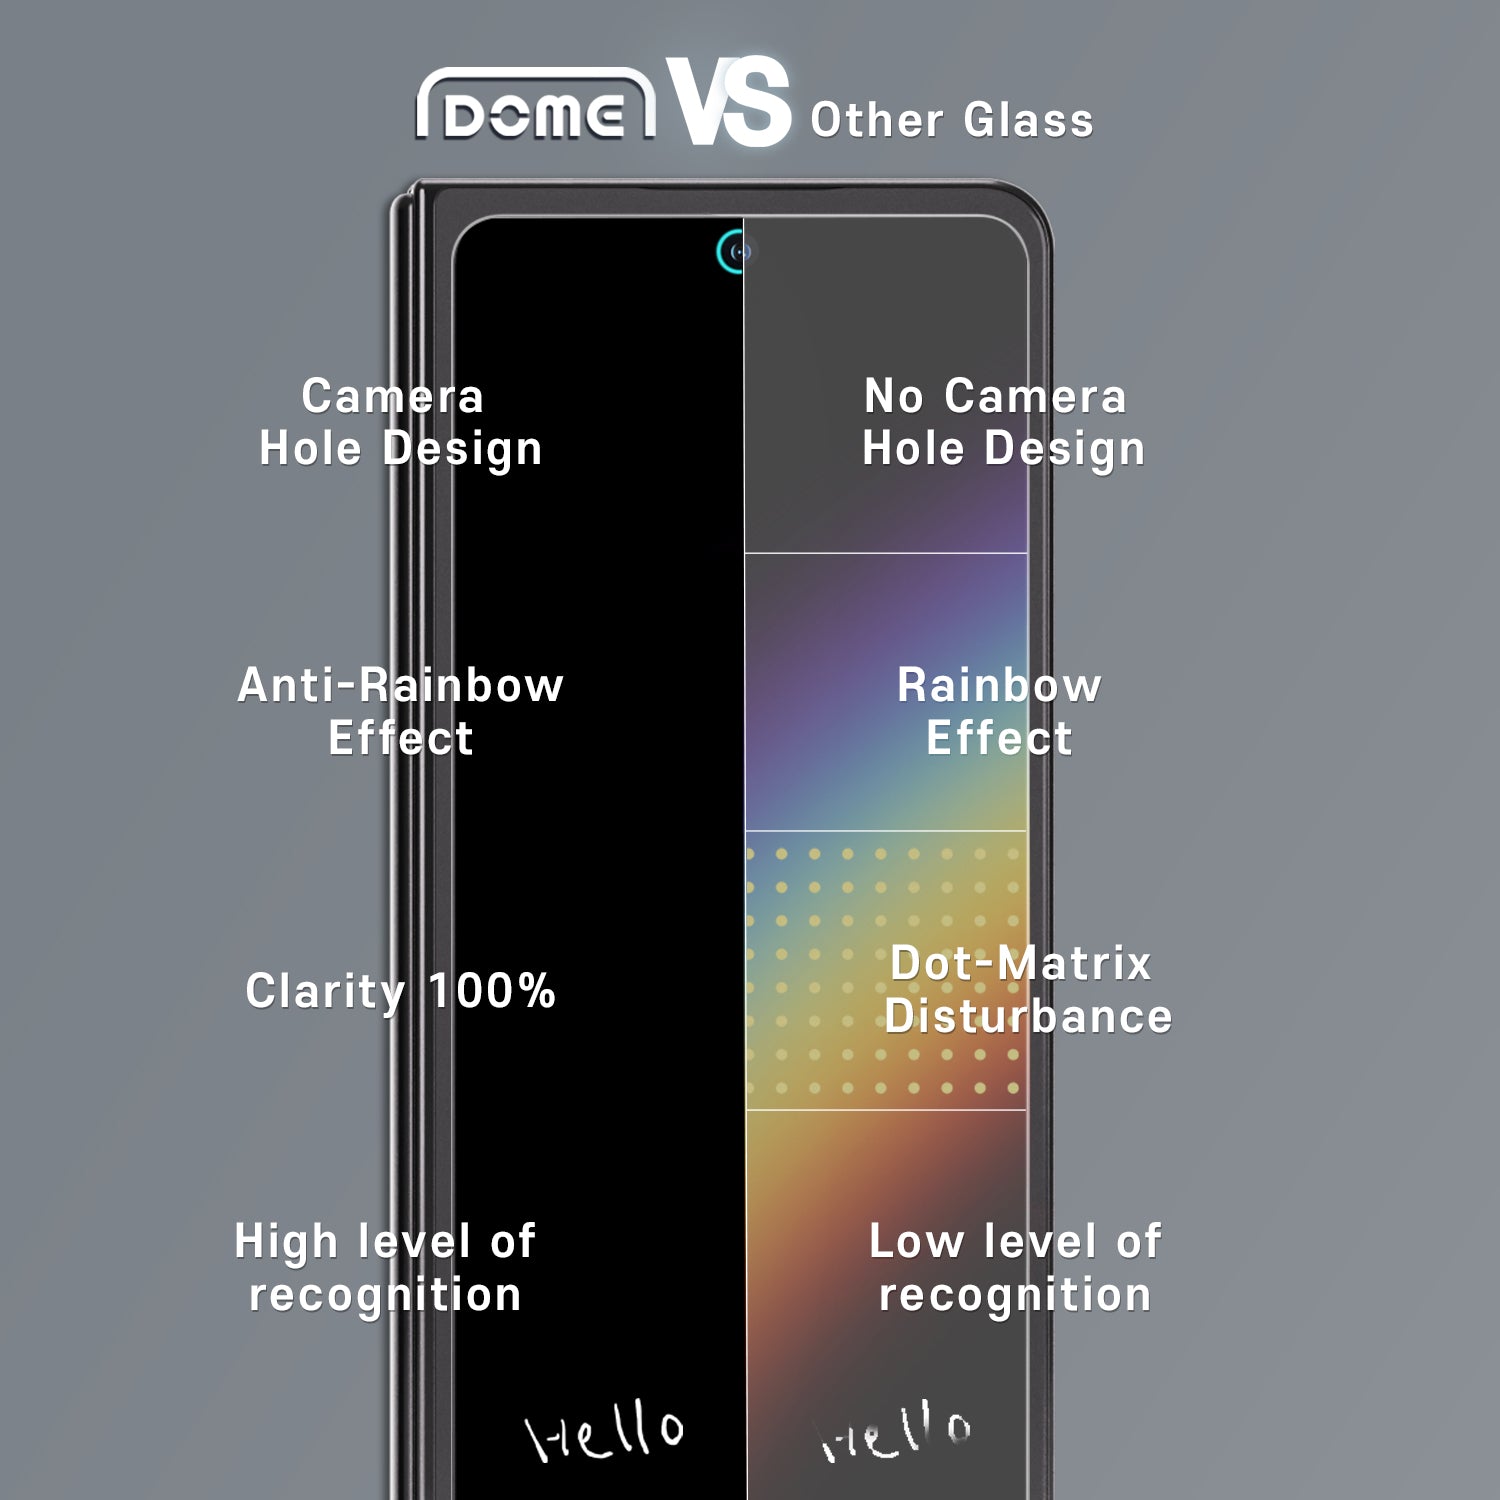 Dome Glass Screen Protector (2 Stück) Samsung Galaxy Z Fold 5